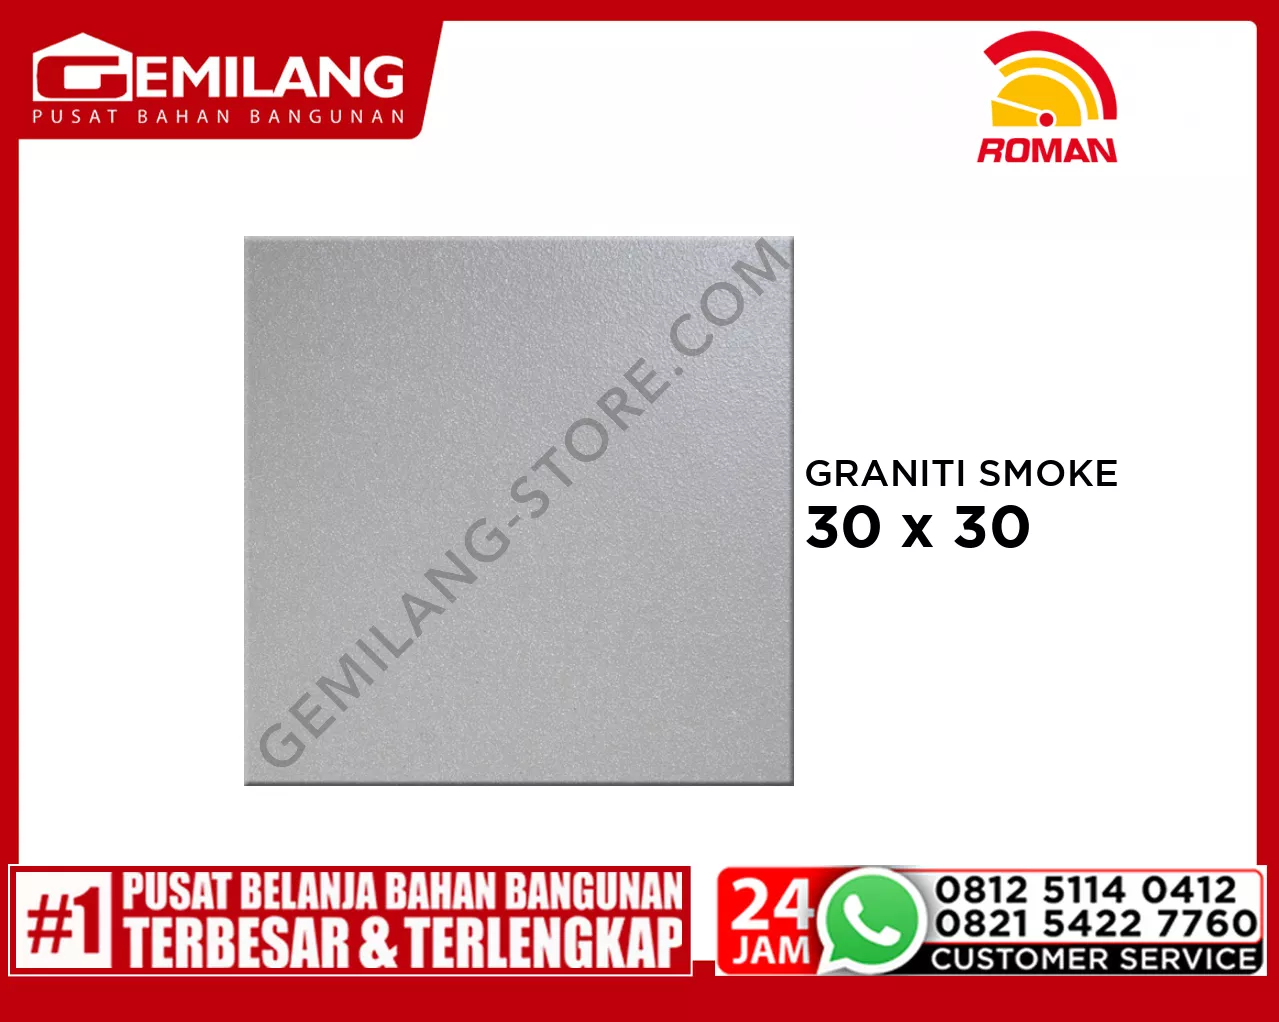 ROMAN GRANITI SMOKE (G337403) 30 x 30